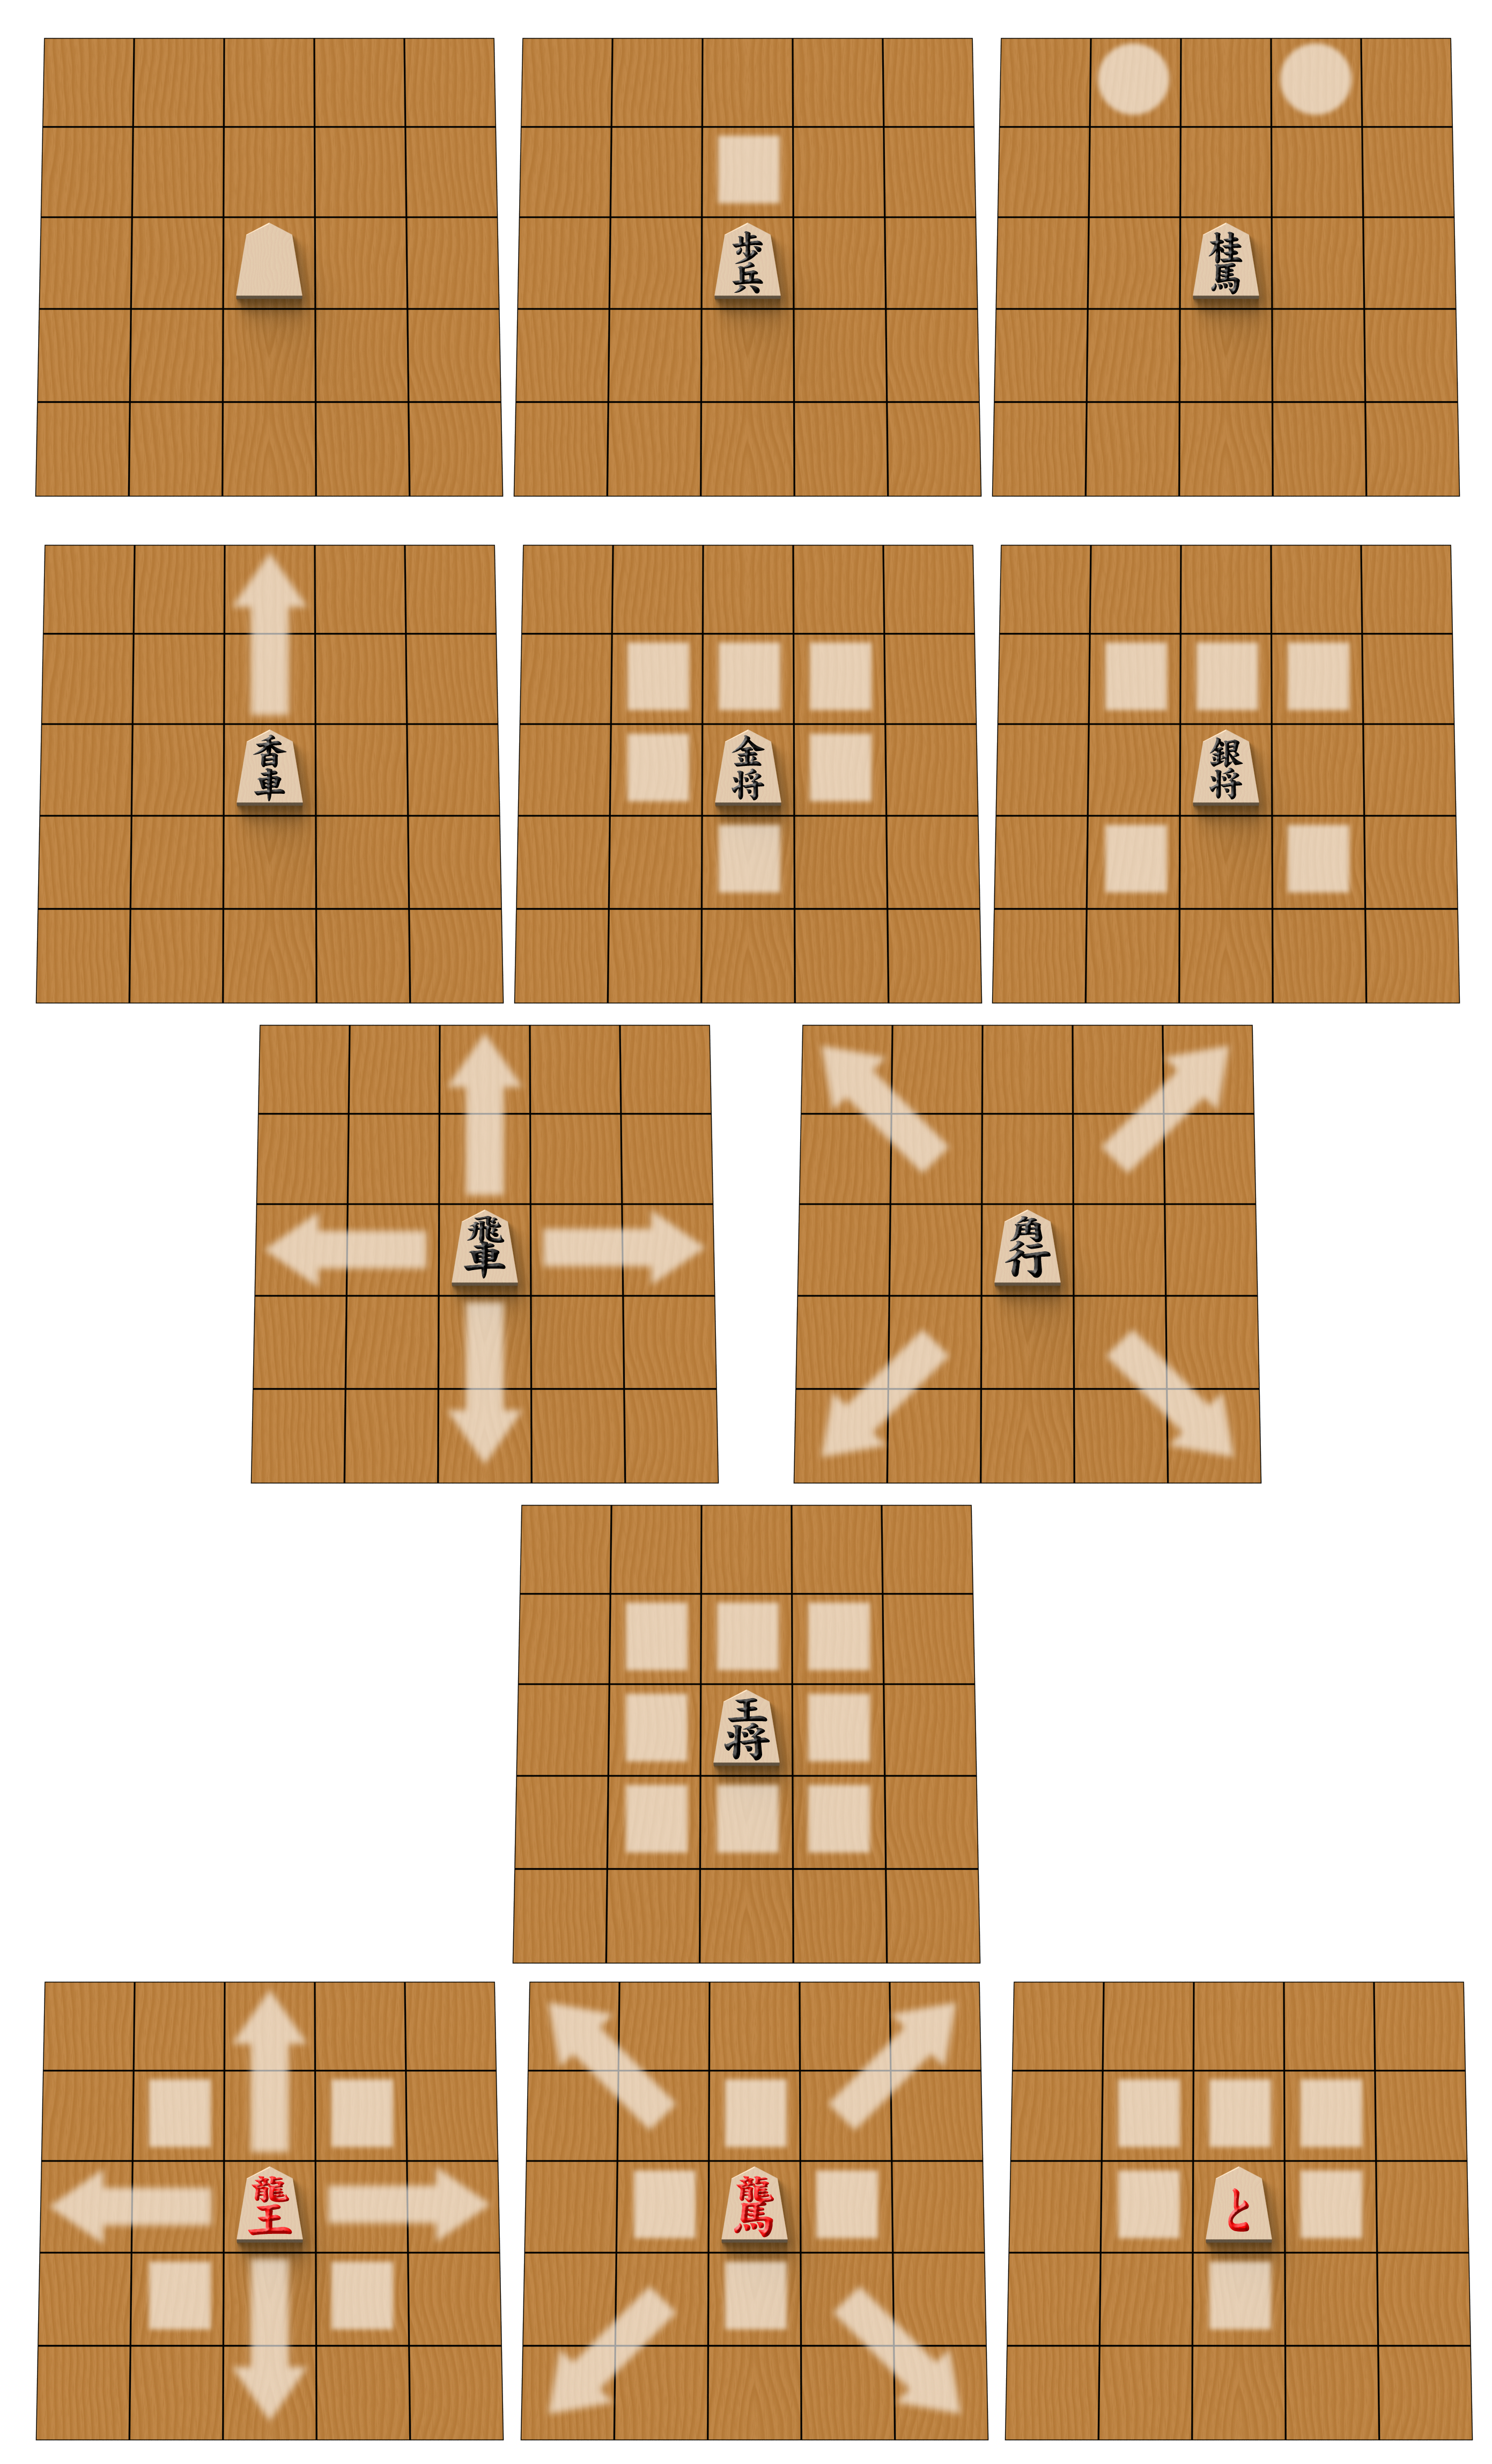 将棋のコマ移動説明用画像 背景透明